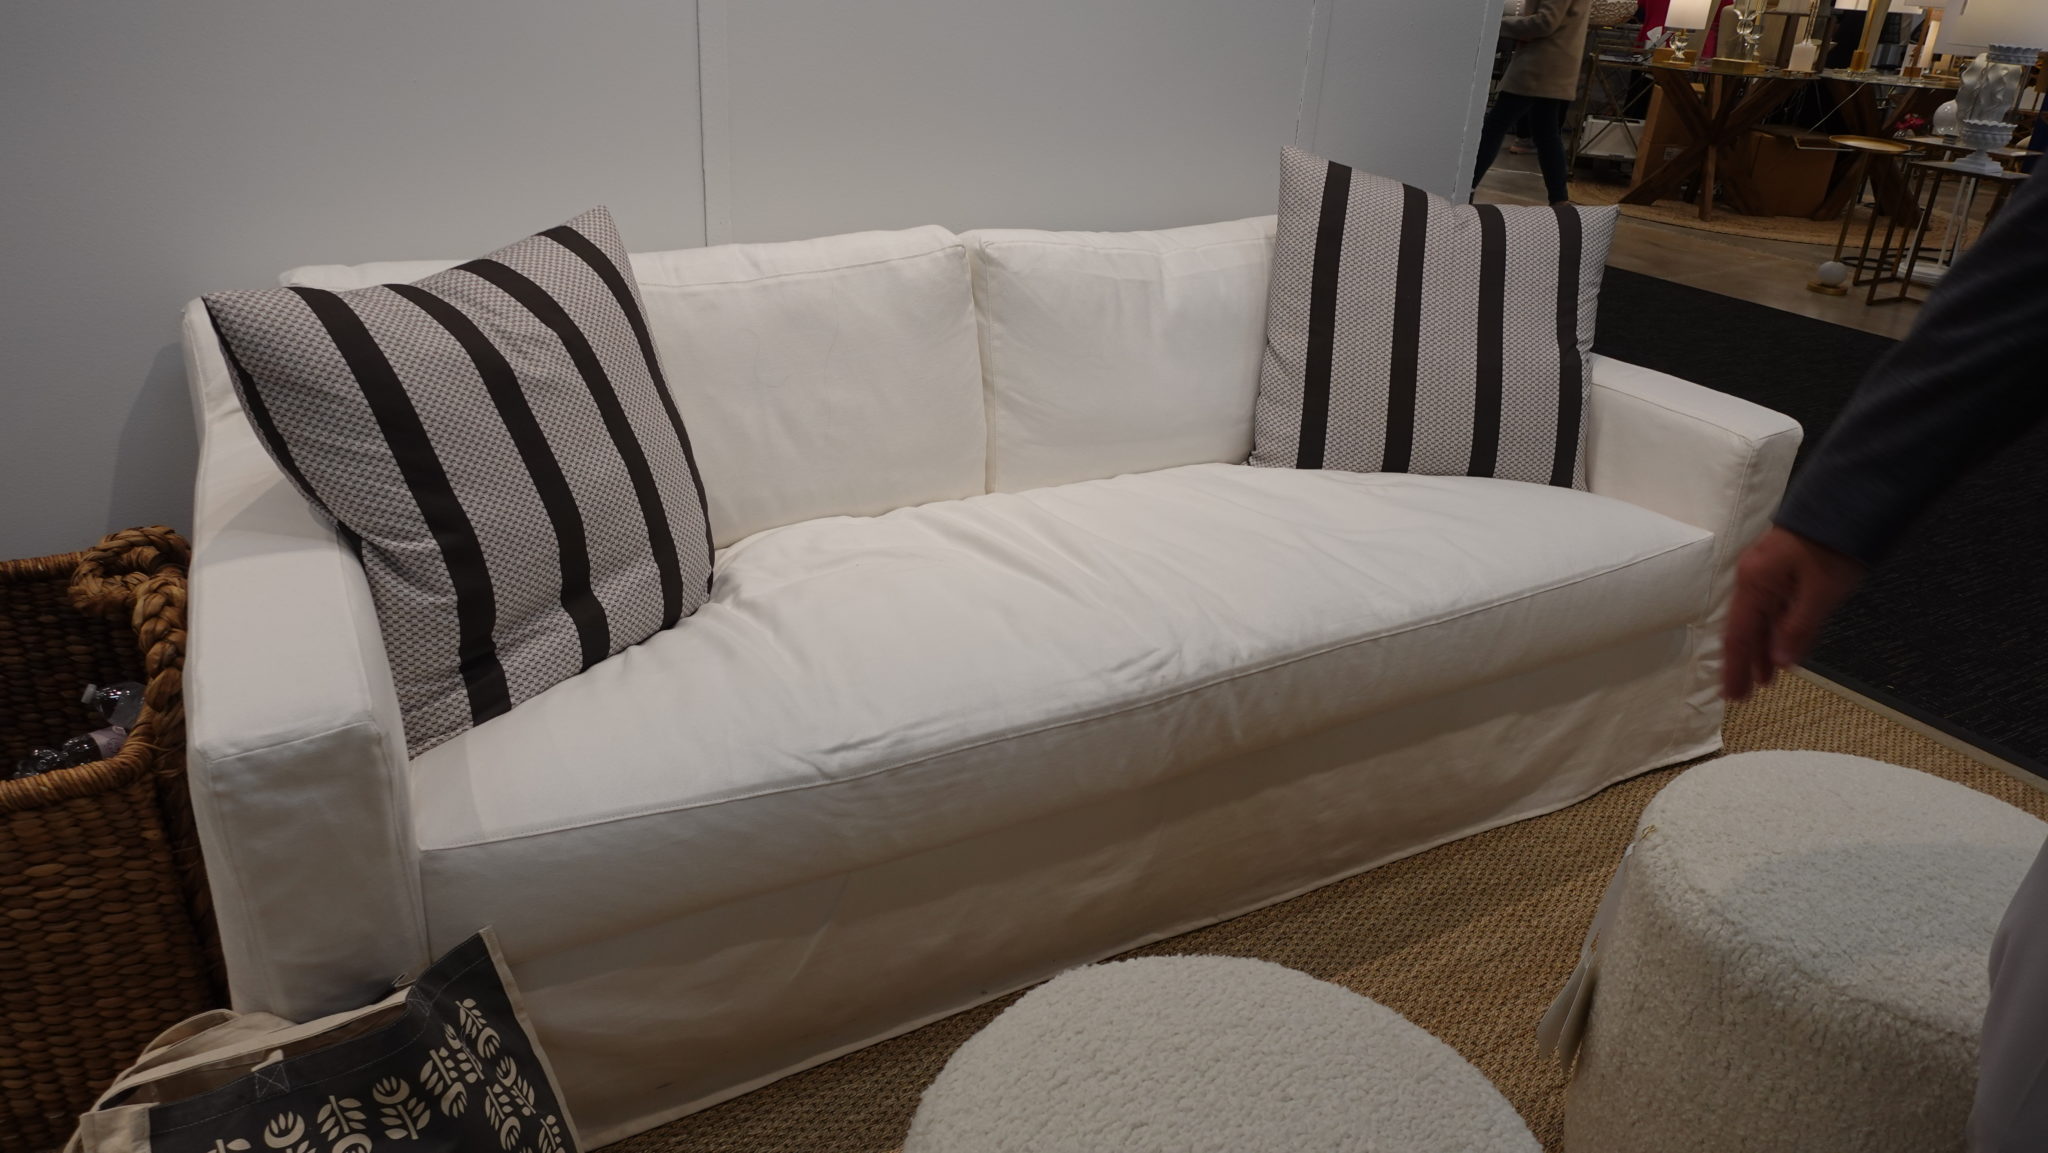 Bespoke Furniture Selection for Luxury Homes - Dwell & Oak